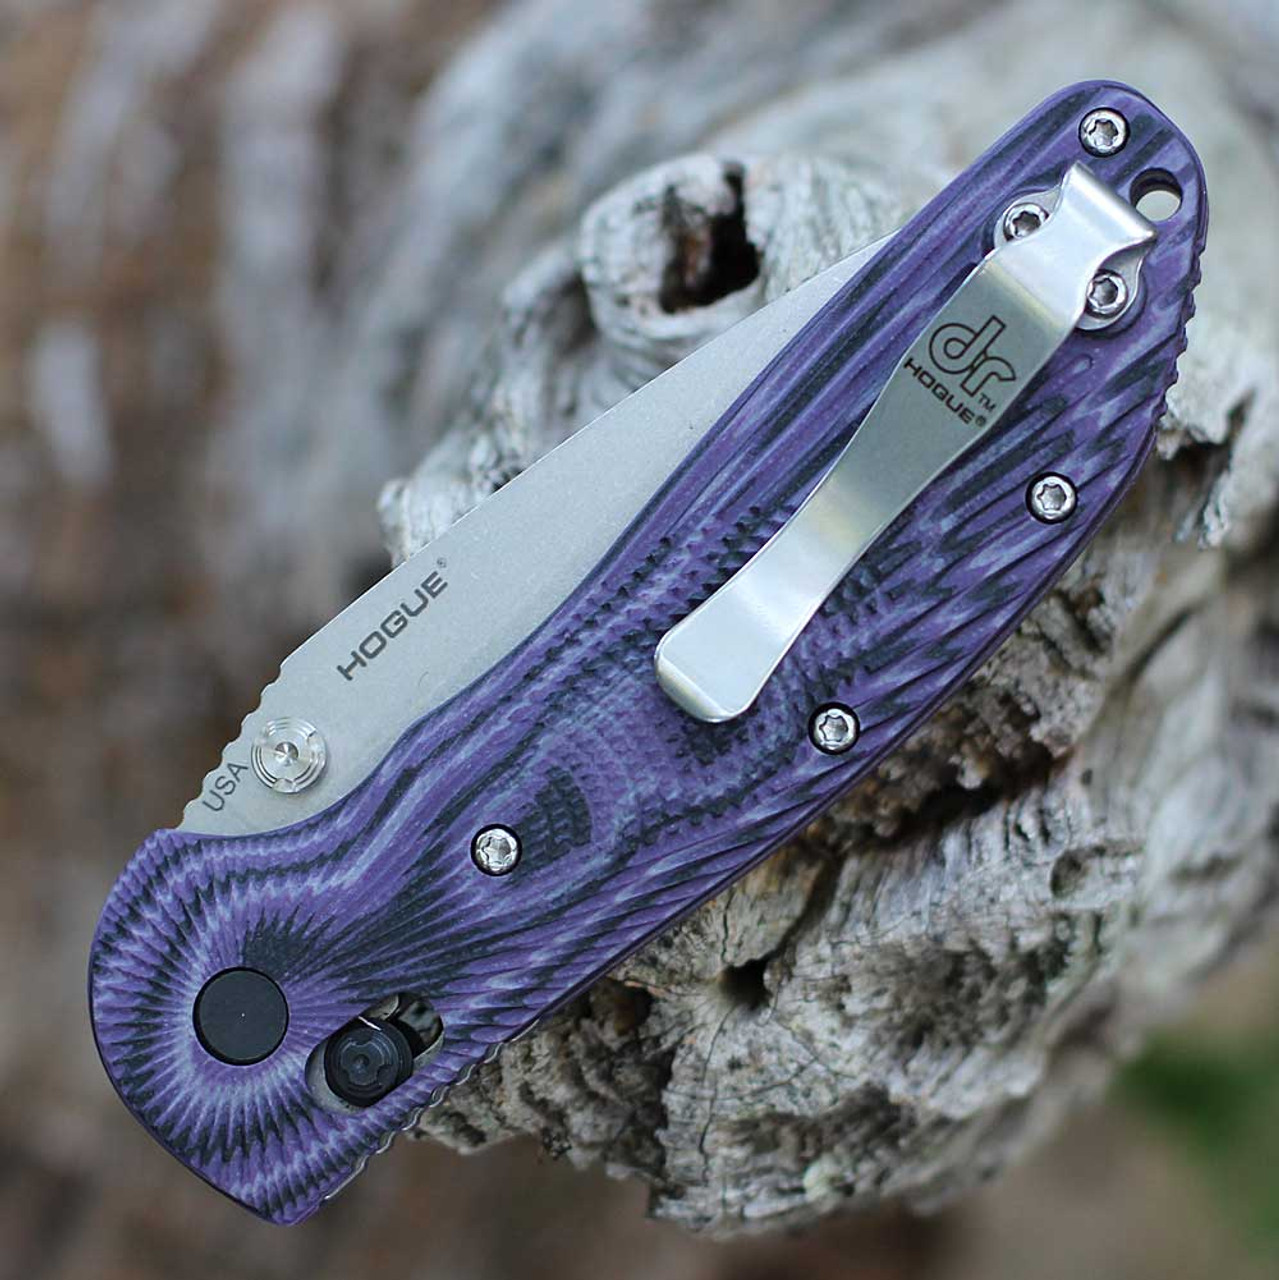 Doug Ritter RSK® MK1-G2 - Knifeworks Exclusive - G-Mascus® Purple G-10